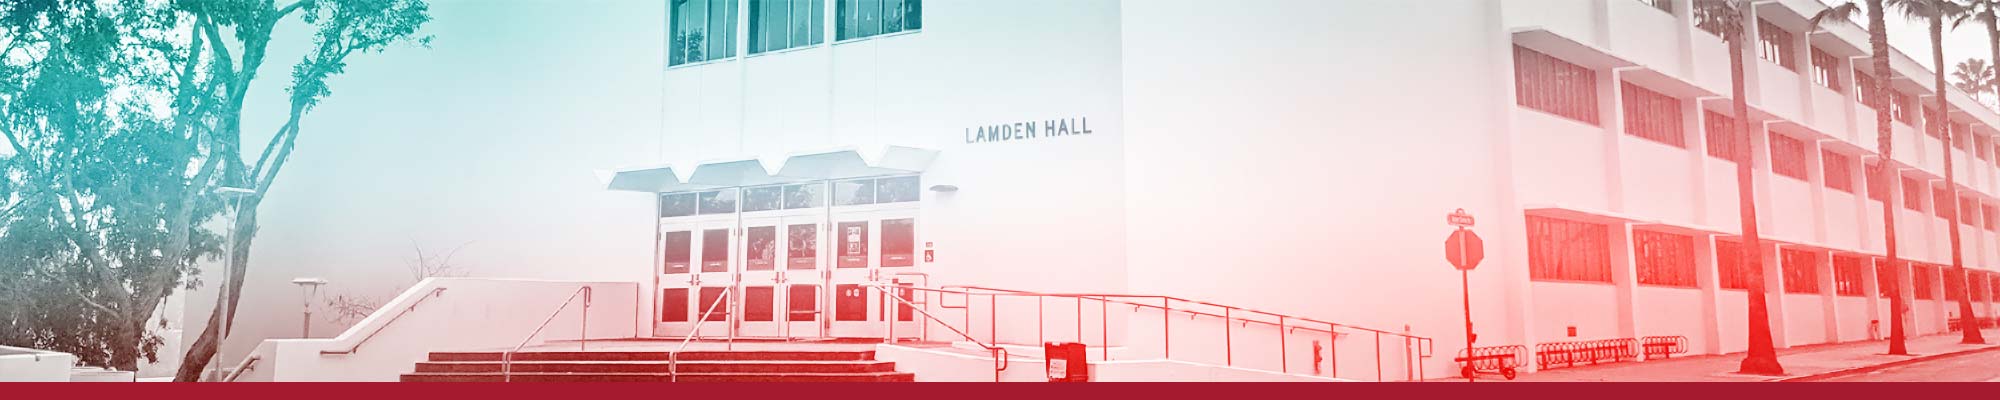 Lamden Hall